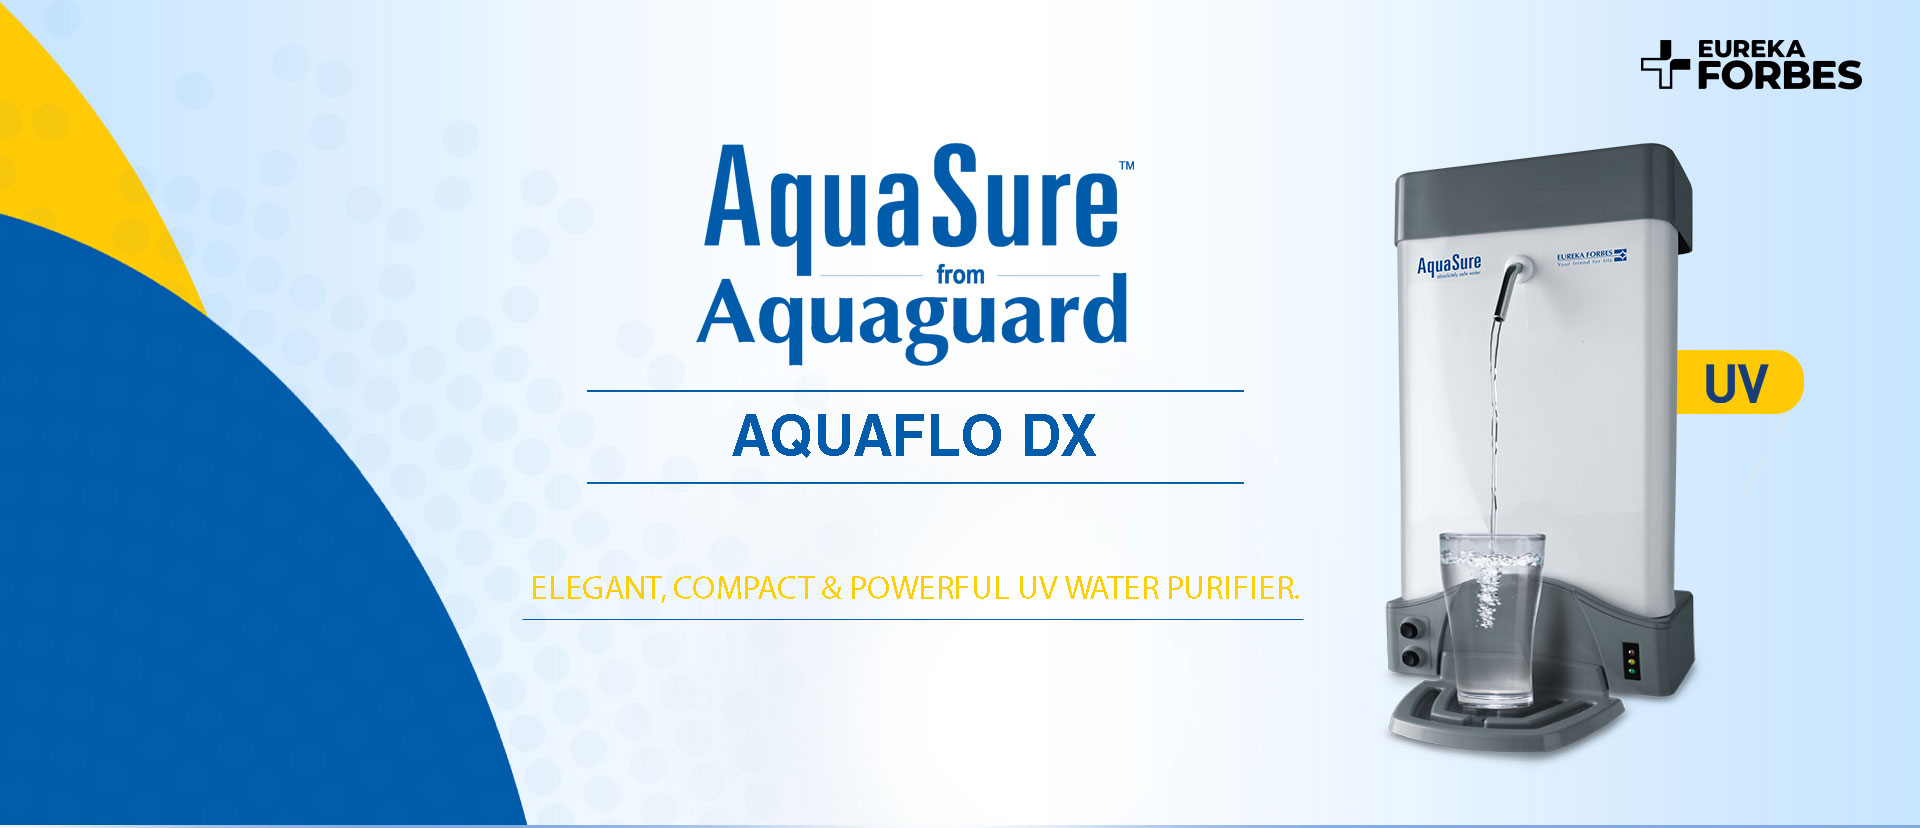 AQUAFLO DX, ELEGANT, COMPACT & POWERFUL UV WATER PURIFIER.